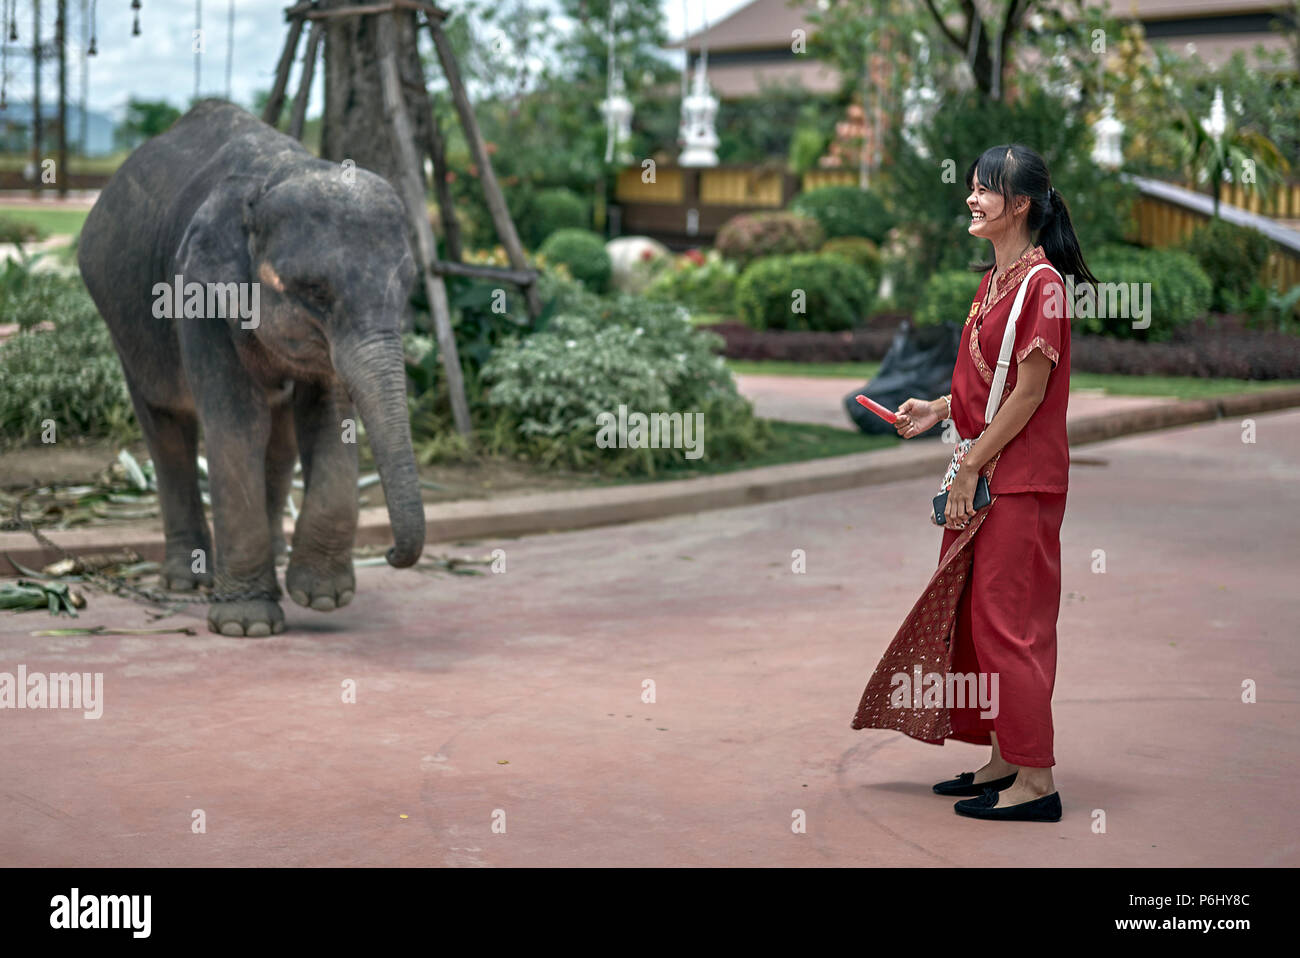 Baby elephant Thailand and Thai woman. Animal human interaction Southeast Asia Stock Photo